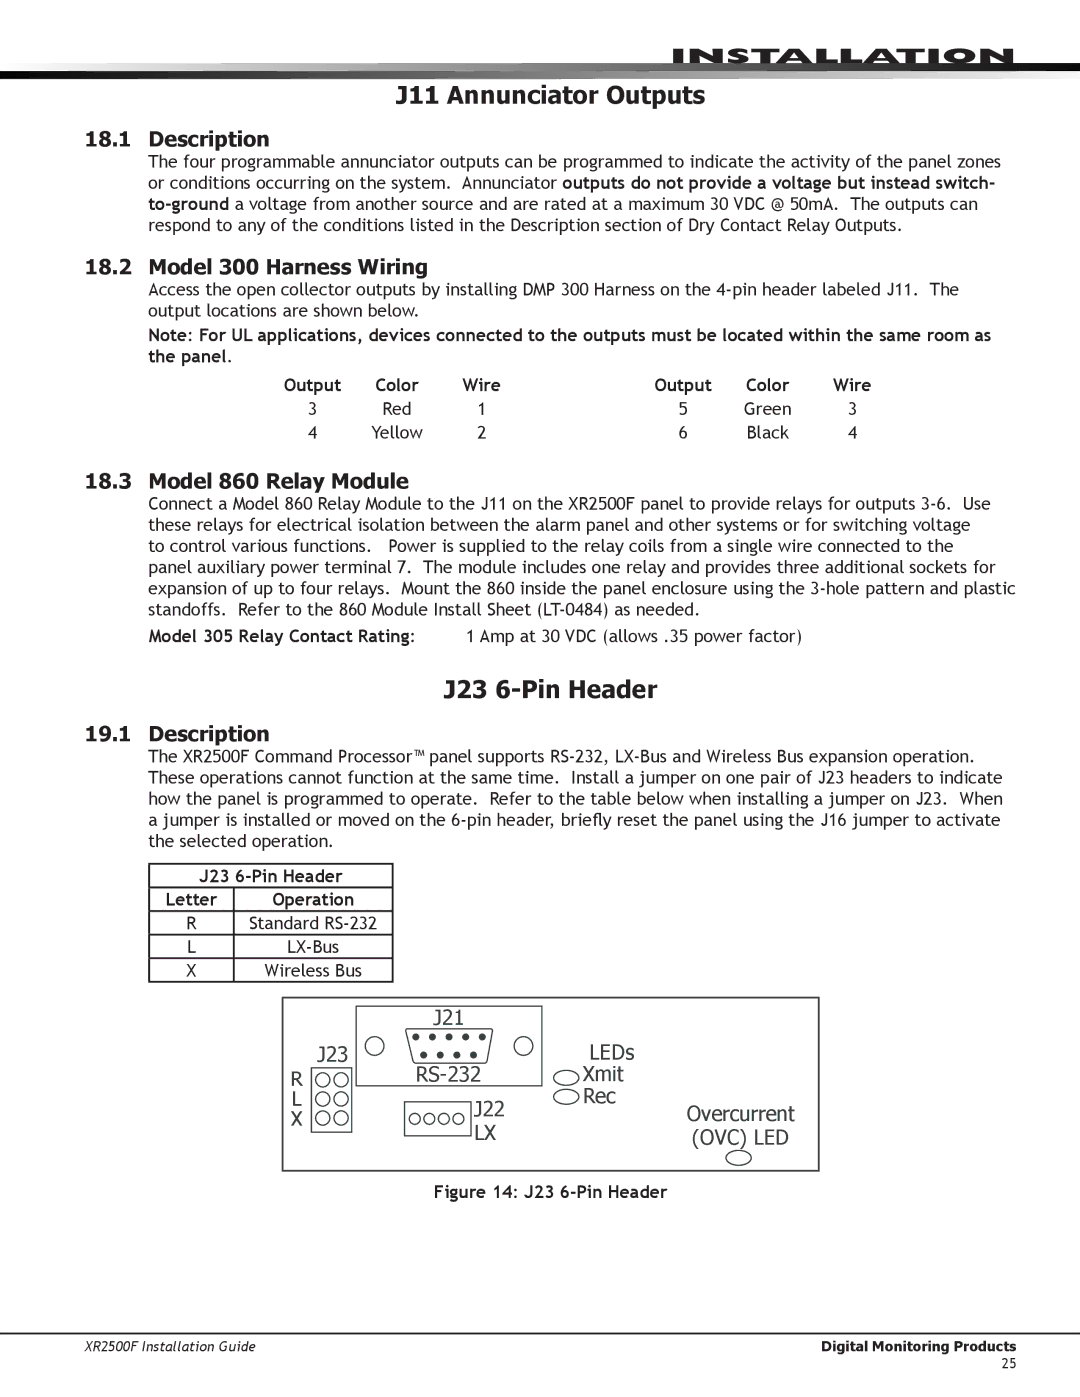 DMP Electronics XR2500F manual J11 Annunciator Outputs, J23 6-Pin Header, Model 300 Harness Wiring, Model 860 Relay Module 